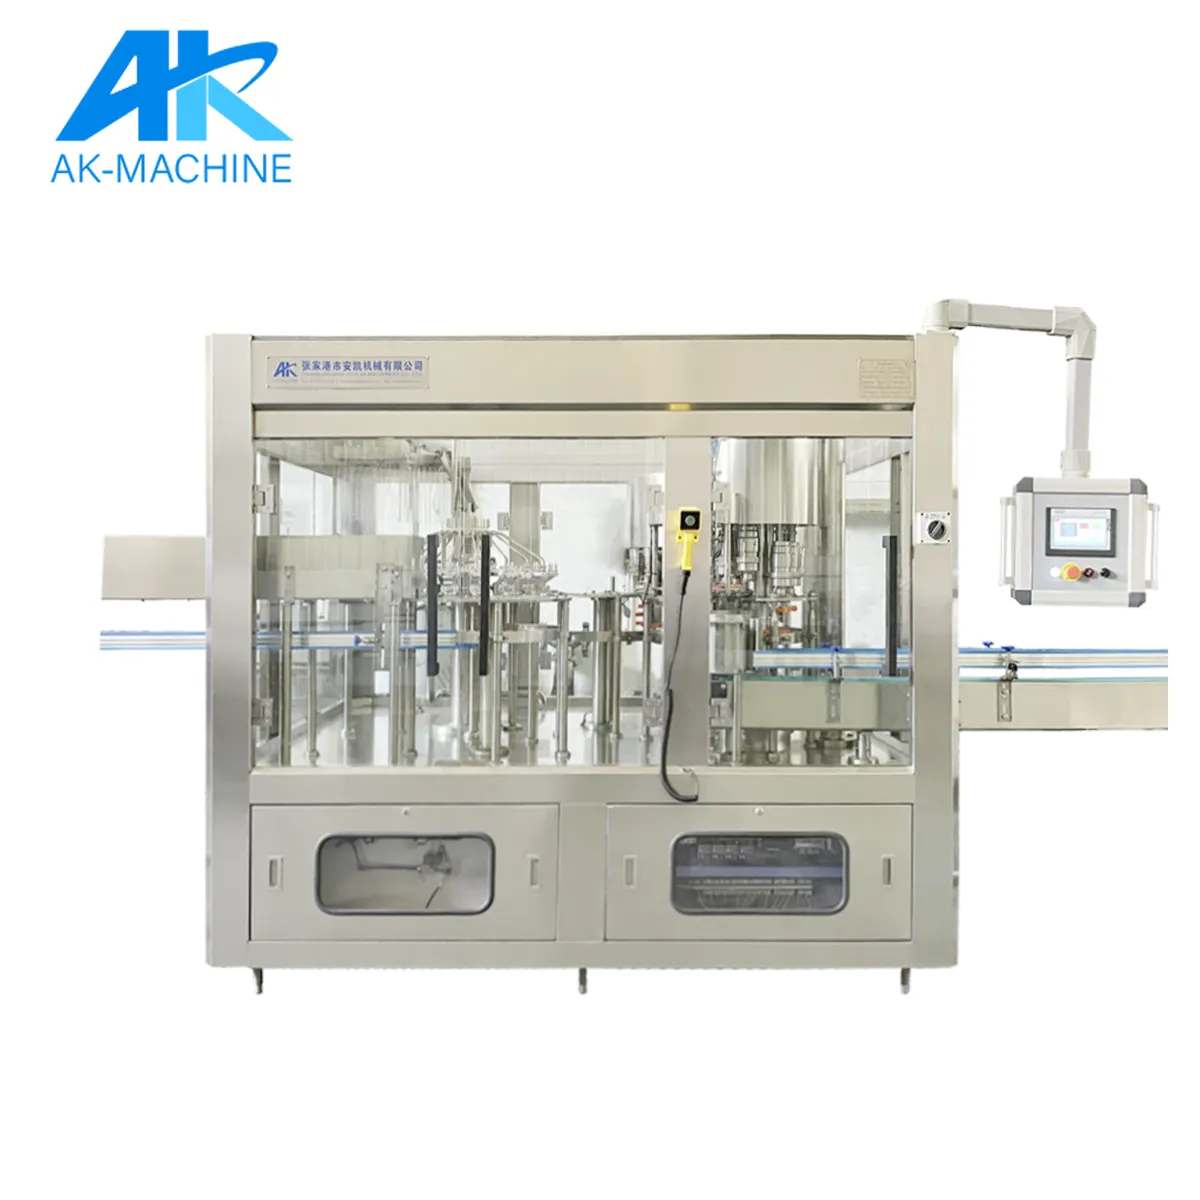 DGF14-12-5 Excellent Precision And Convenient Automatic Liquid Filling Machine For Carbonated